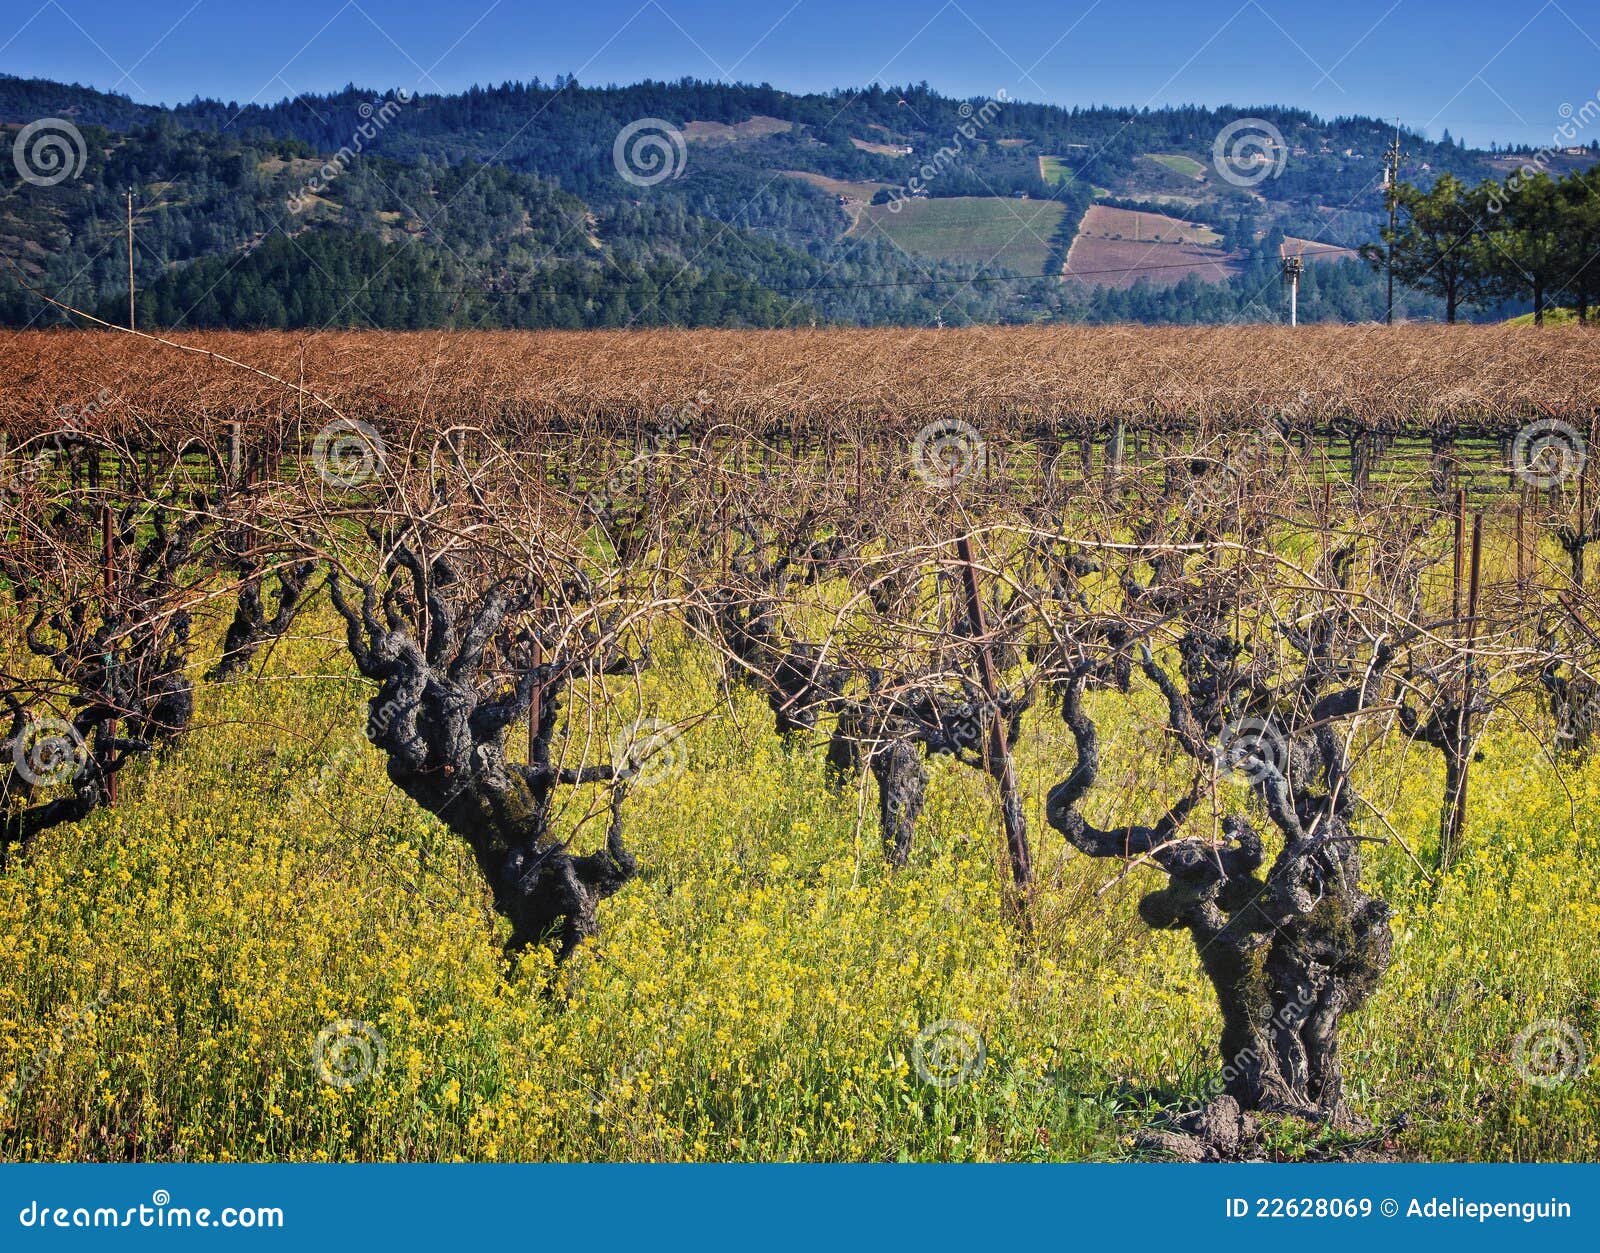 napa valley vineyard, wine country california